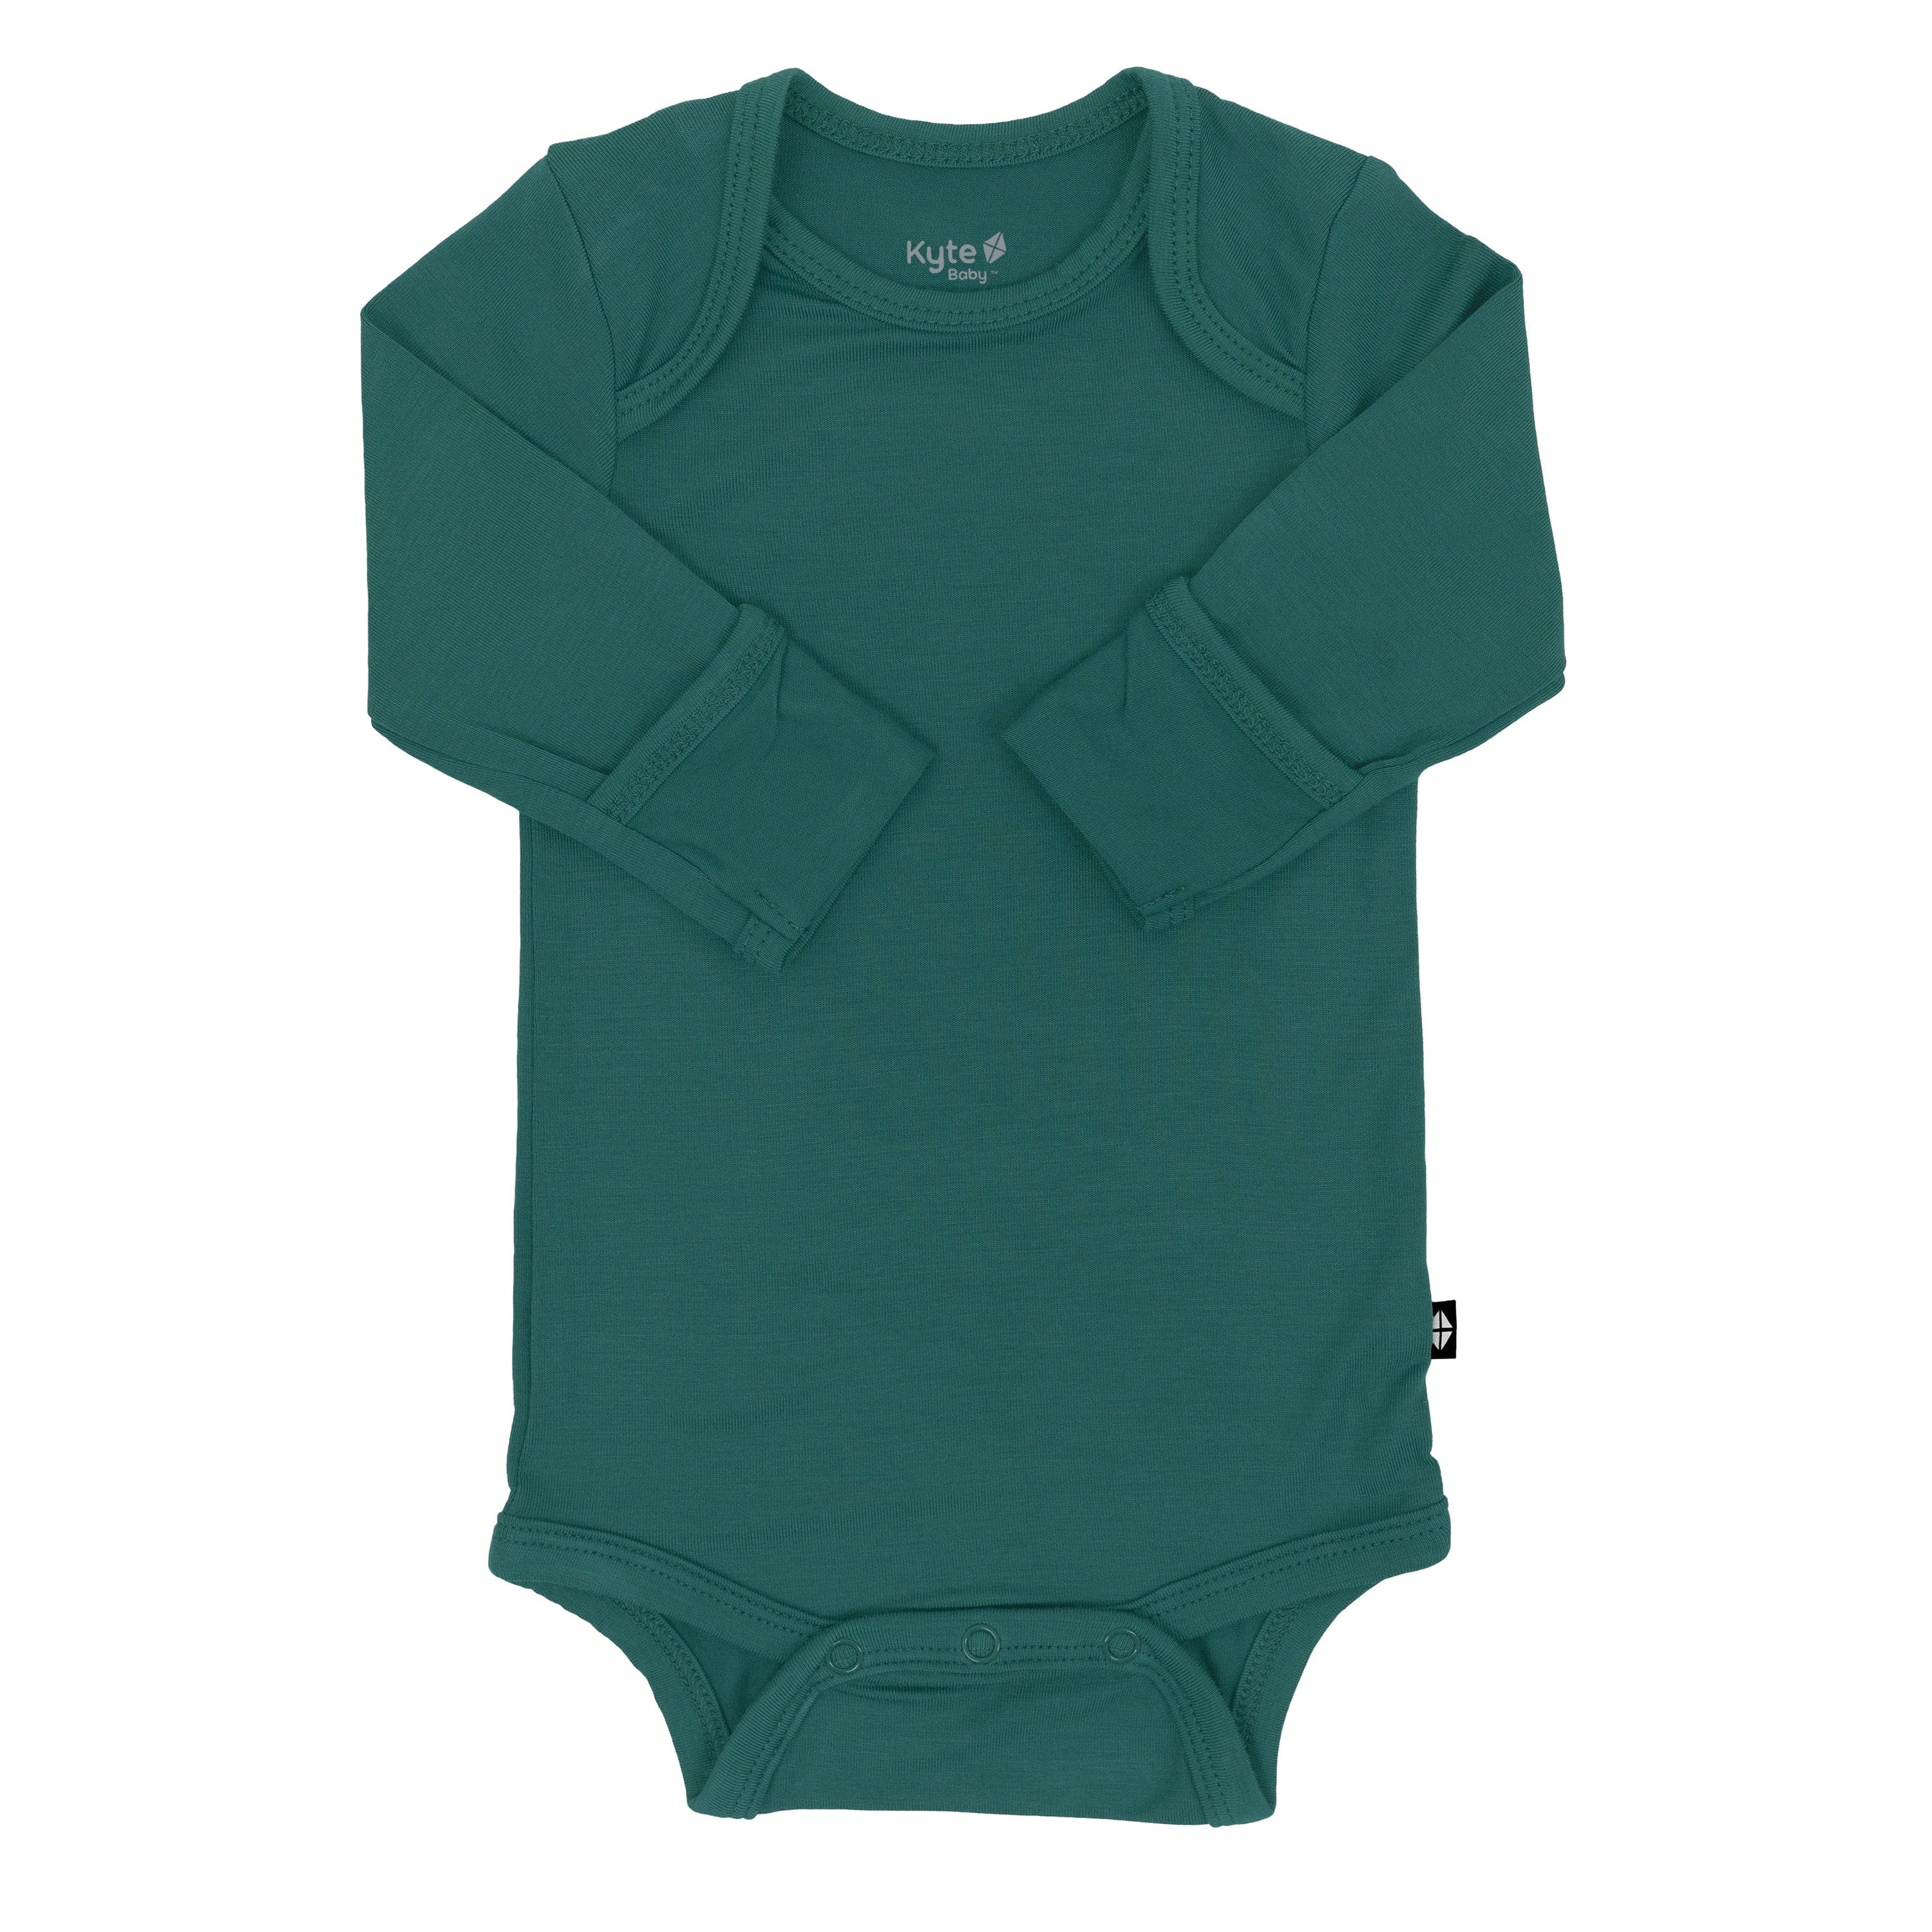 Kyte Baby bamboo Long Sleeve Bodysuit in Emerald